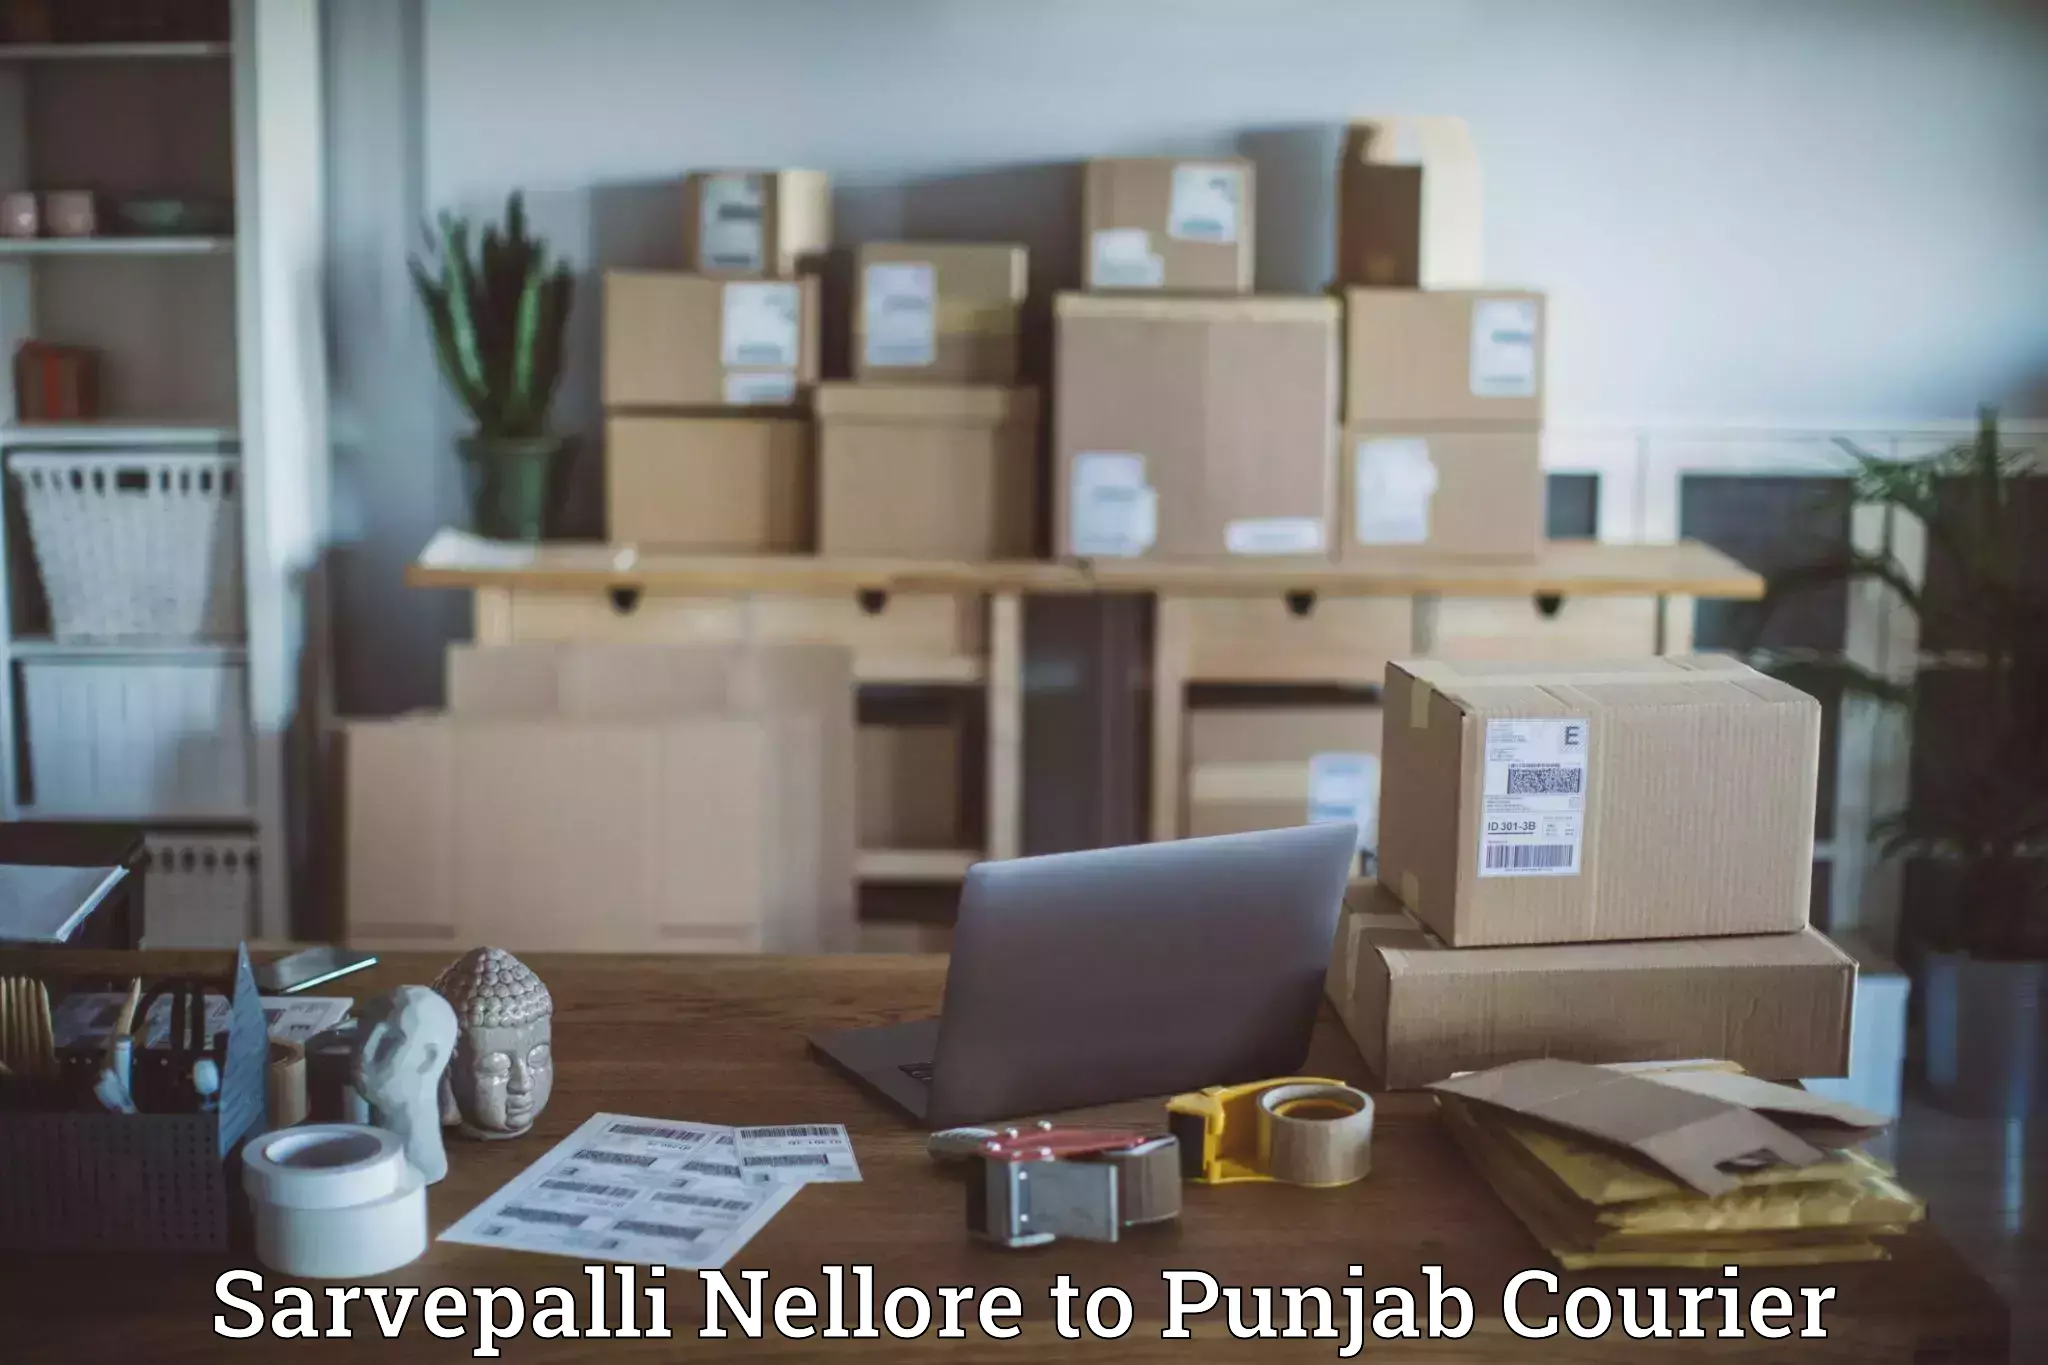 Easy access courier services Sarvepalli Nellore to Sultanpur Lodhi